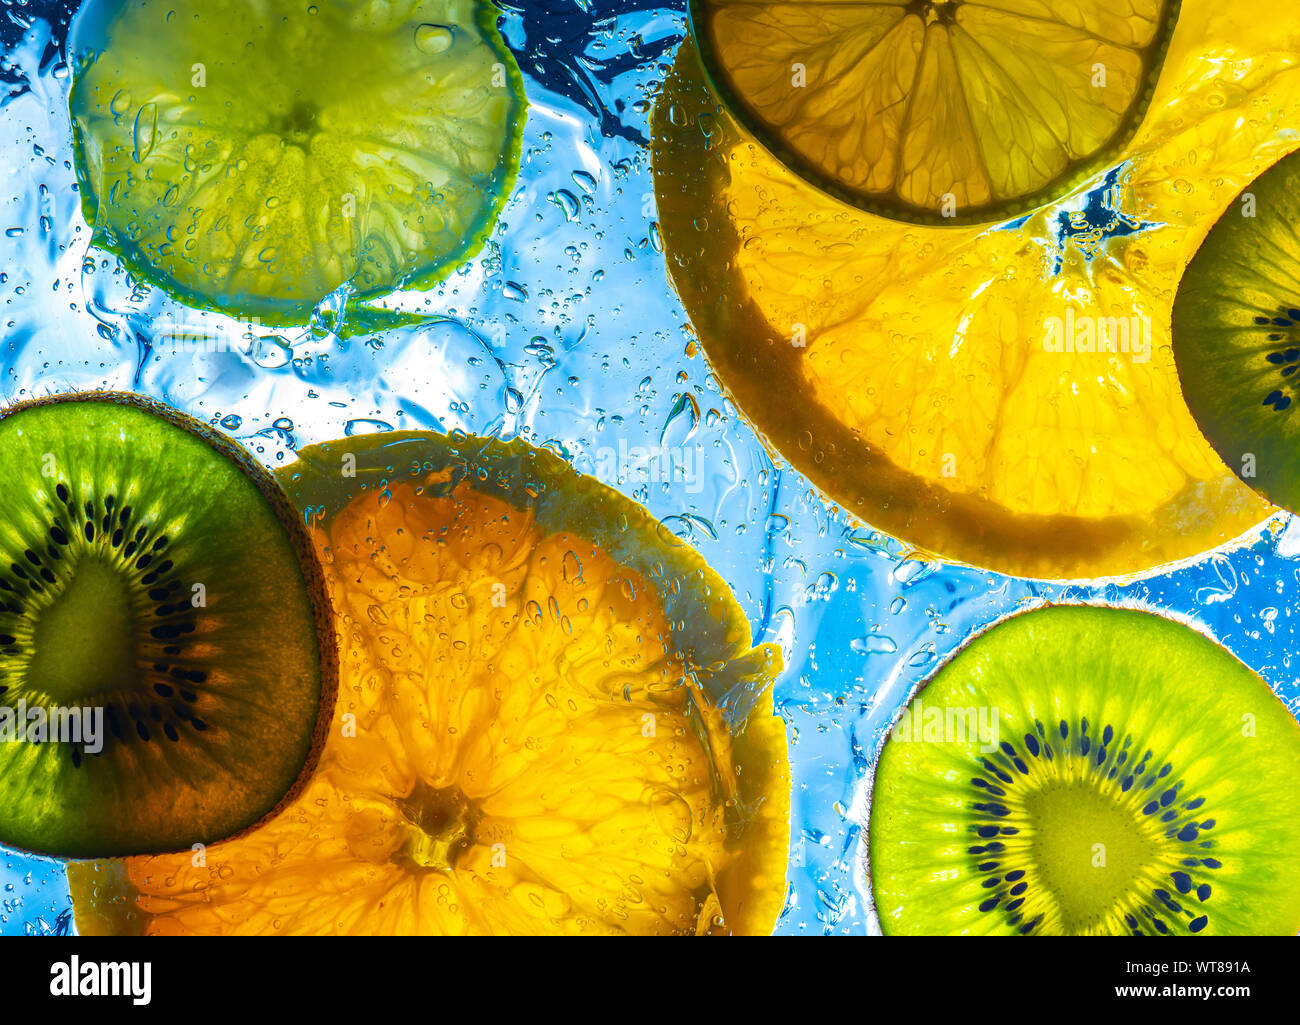 Close up photograph of citrus fruits Stock Photo